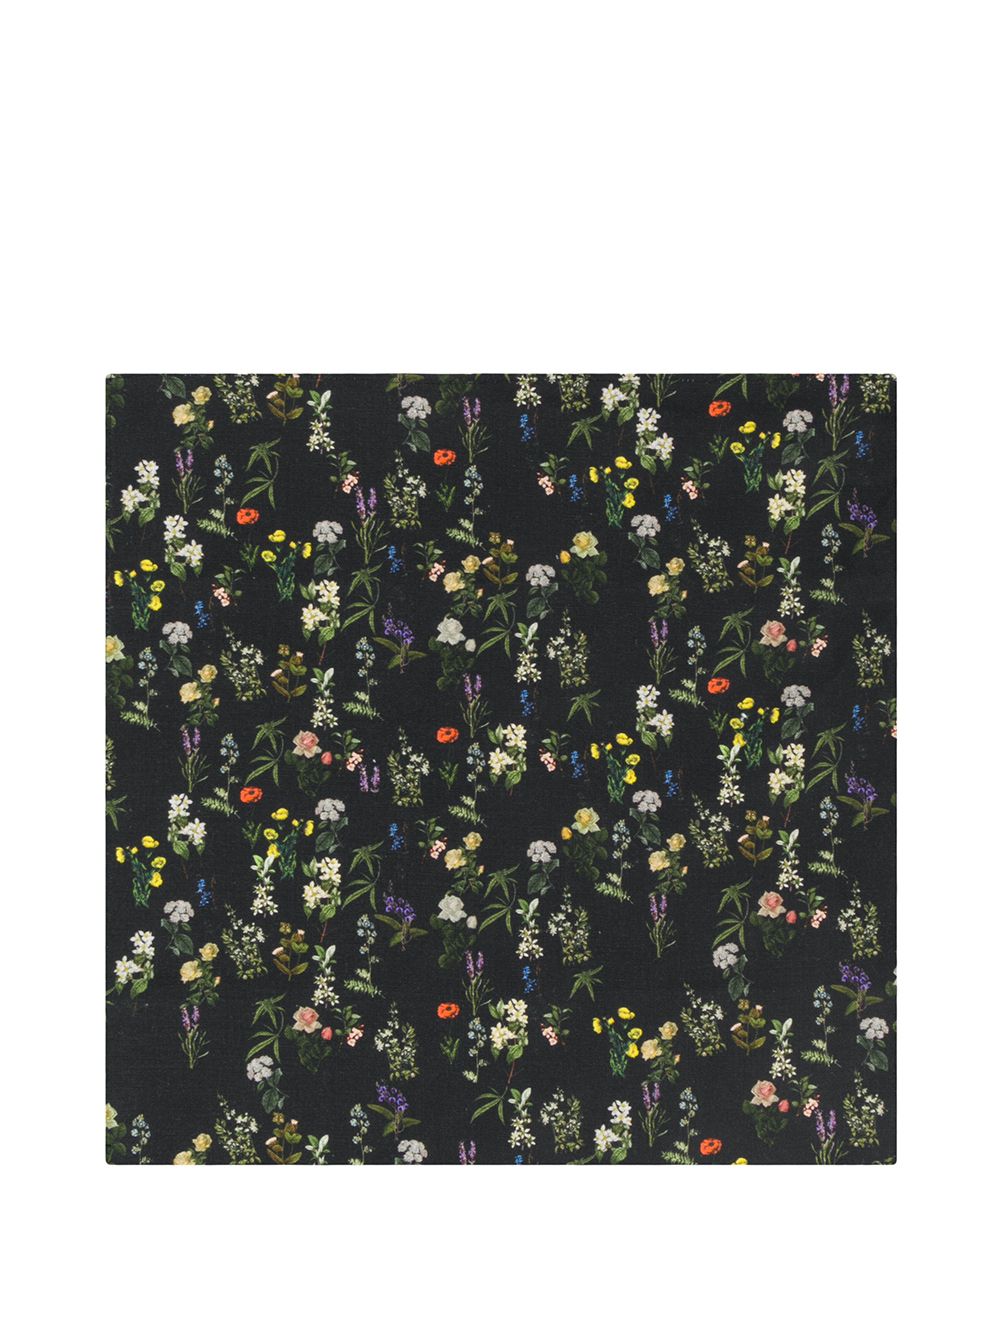 фото Preen by thornton bregazzi набор салфеток с цветочным принтом